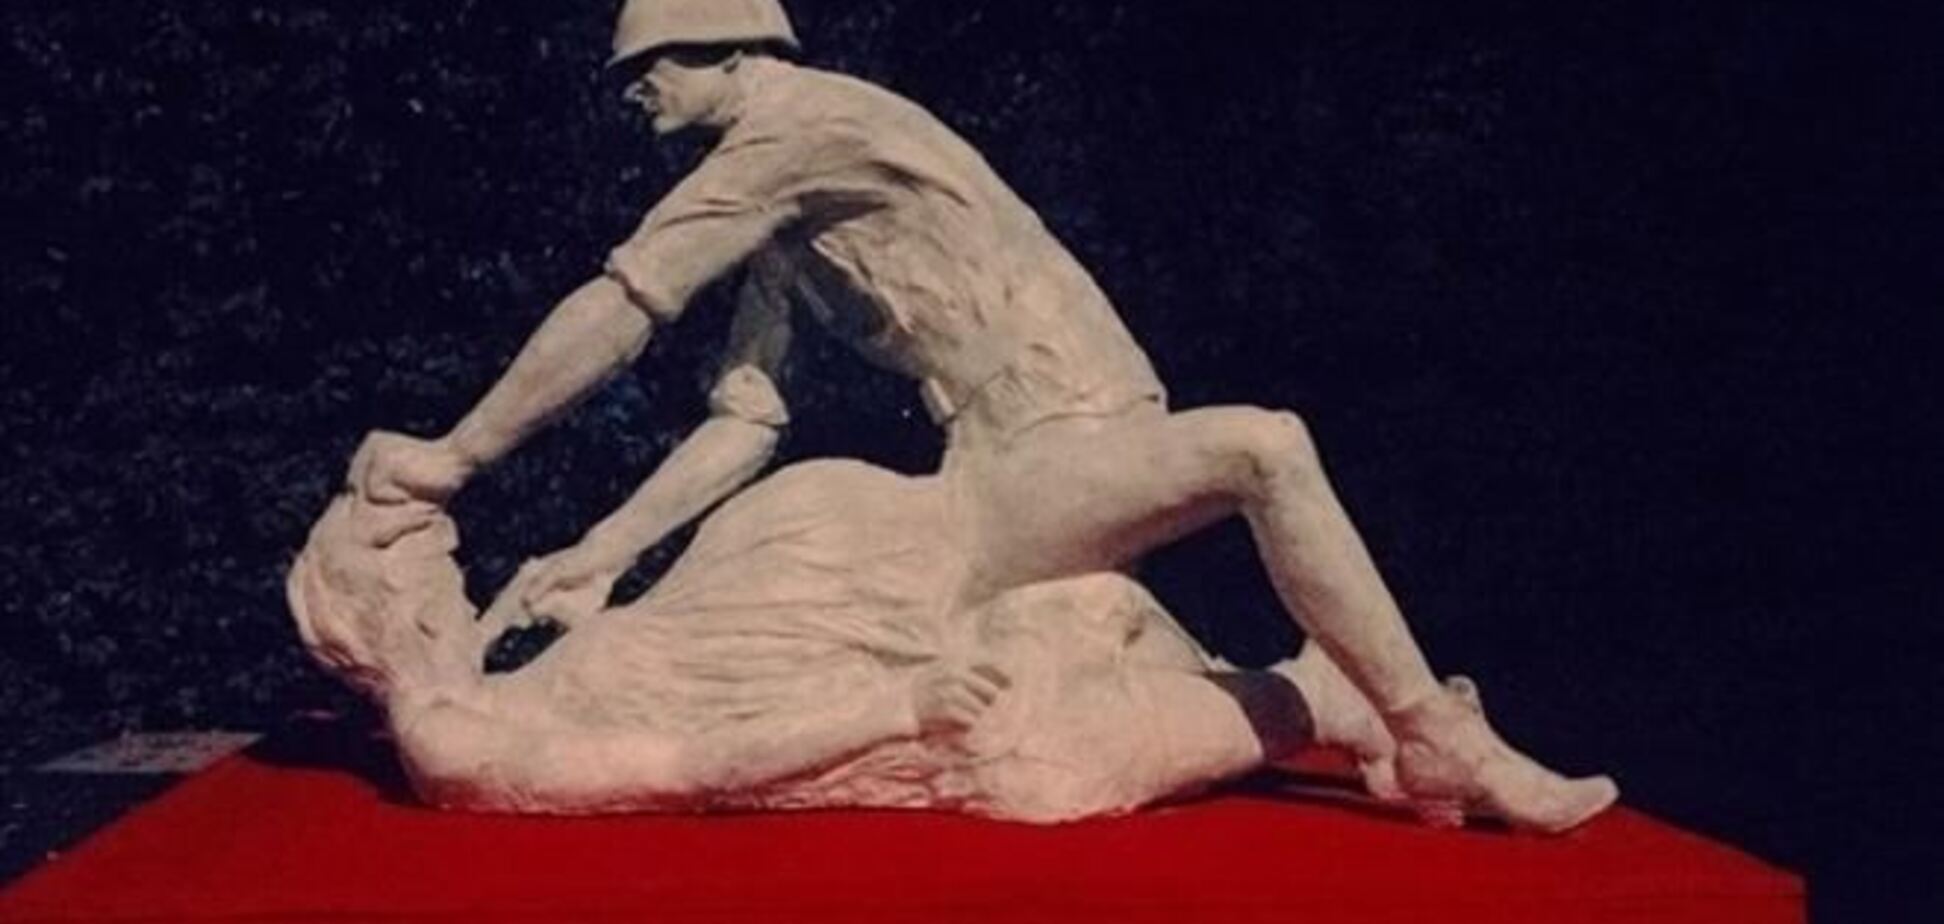 У Гданську скульптура радянського солдата-гвалтівника простояла одну ніч